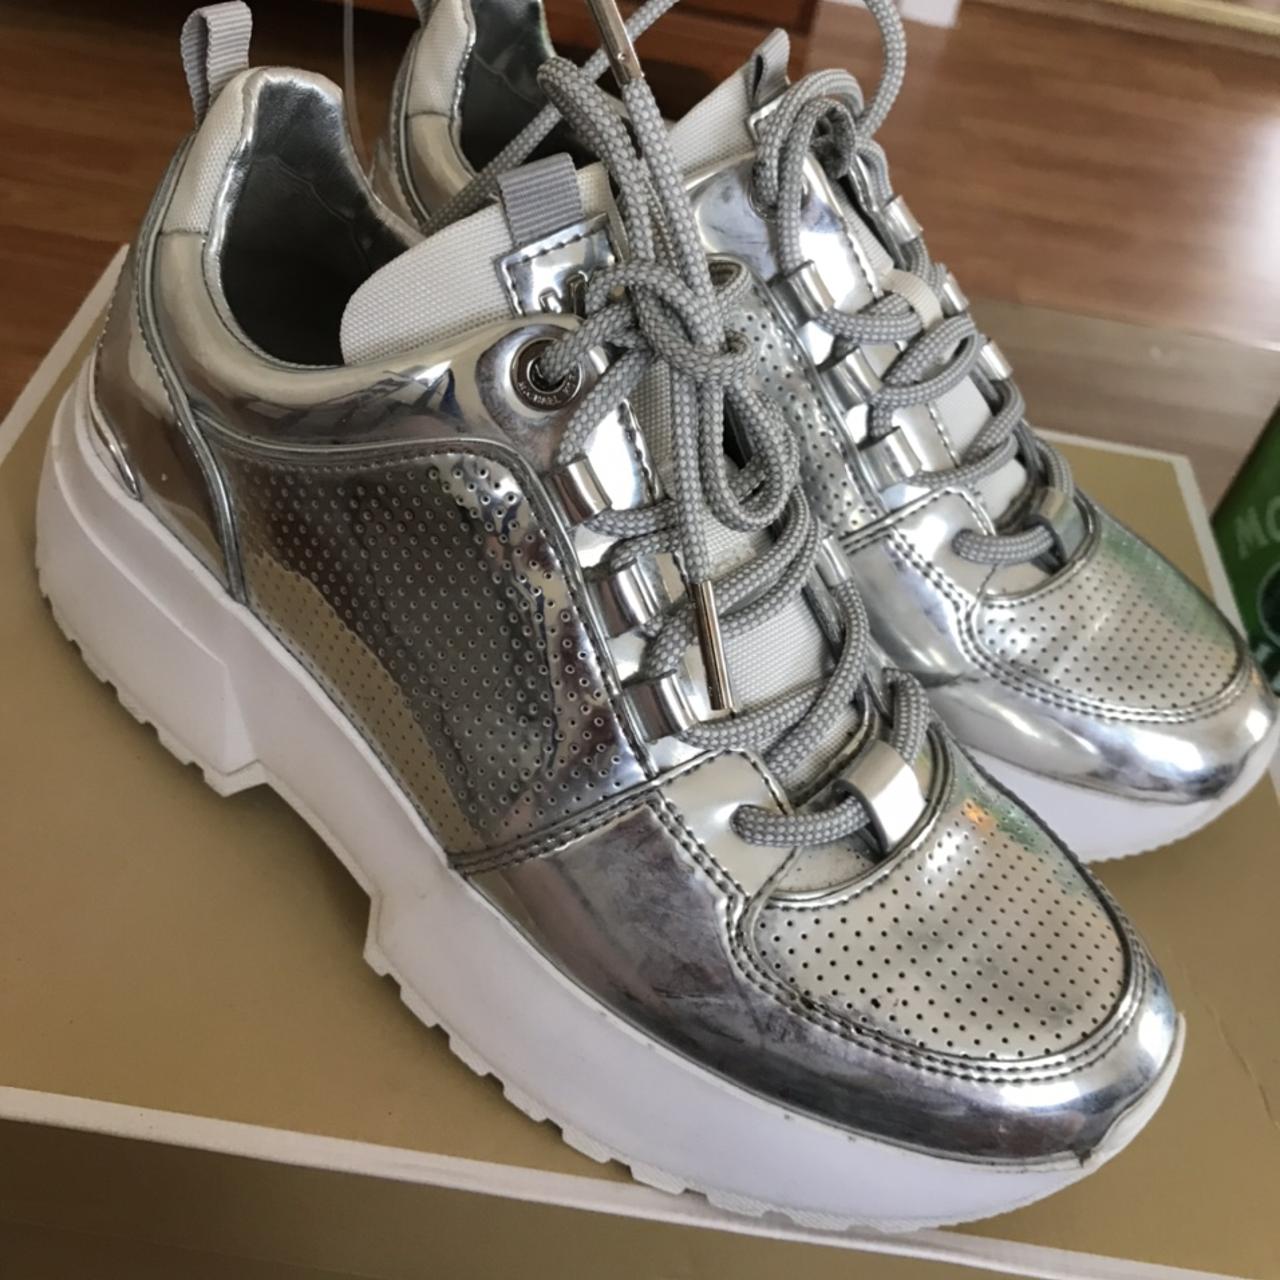 michael-kors-online-trainers-irving-glitter-silver-sneakers -00000121499f00s062.jpg